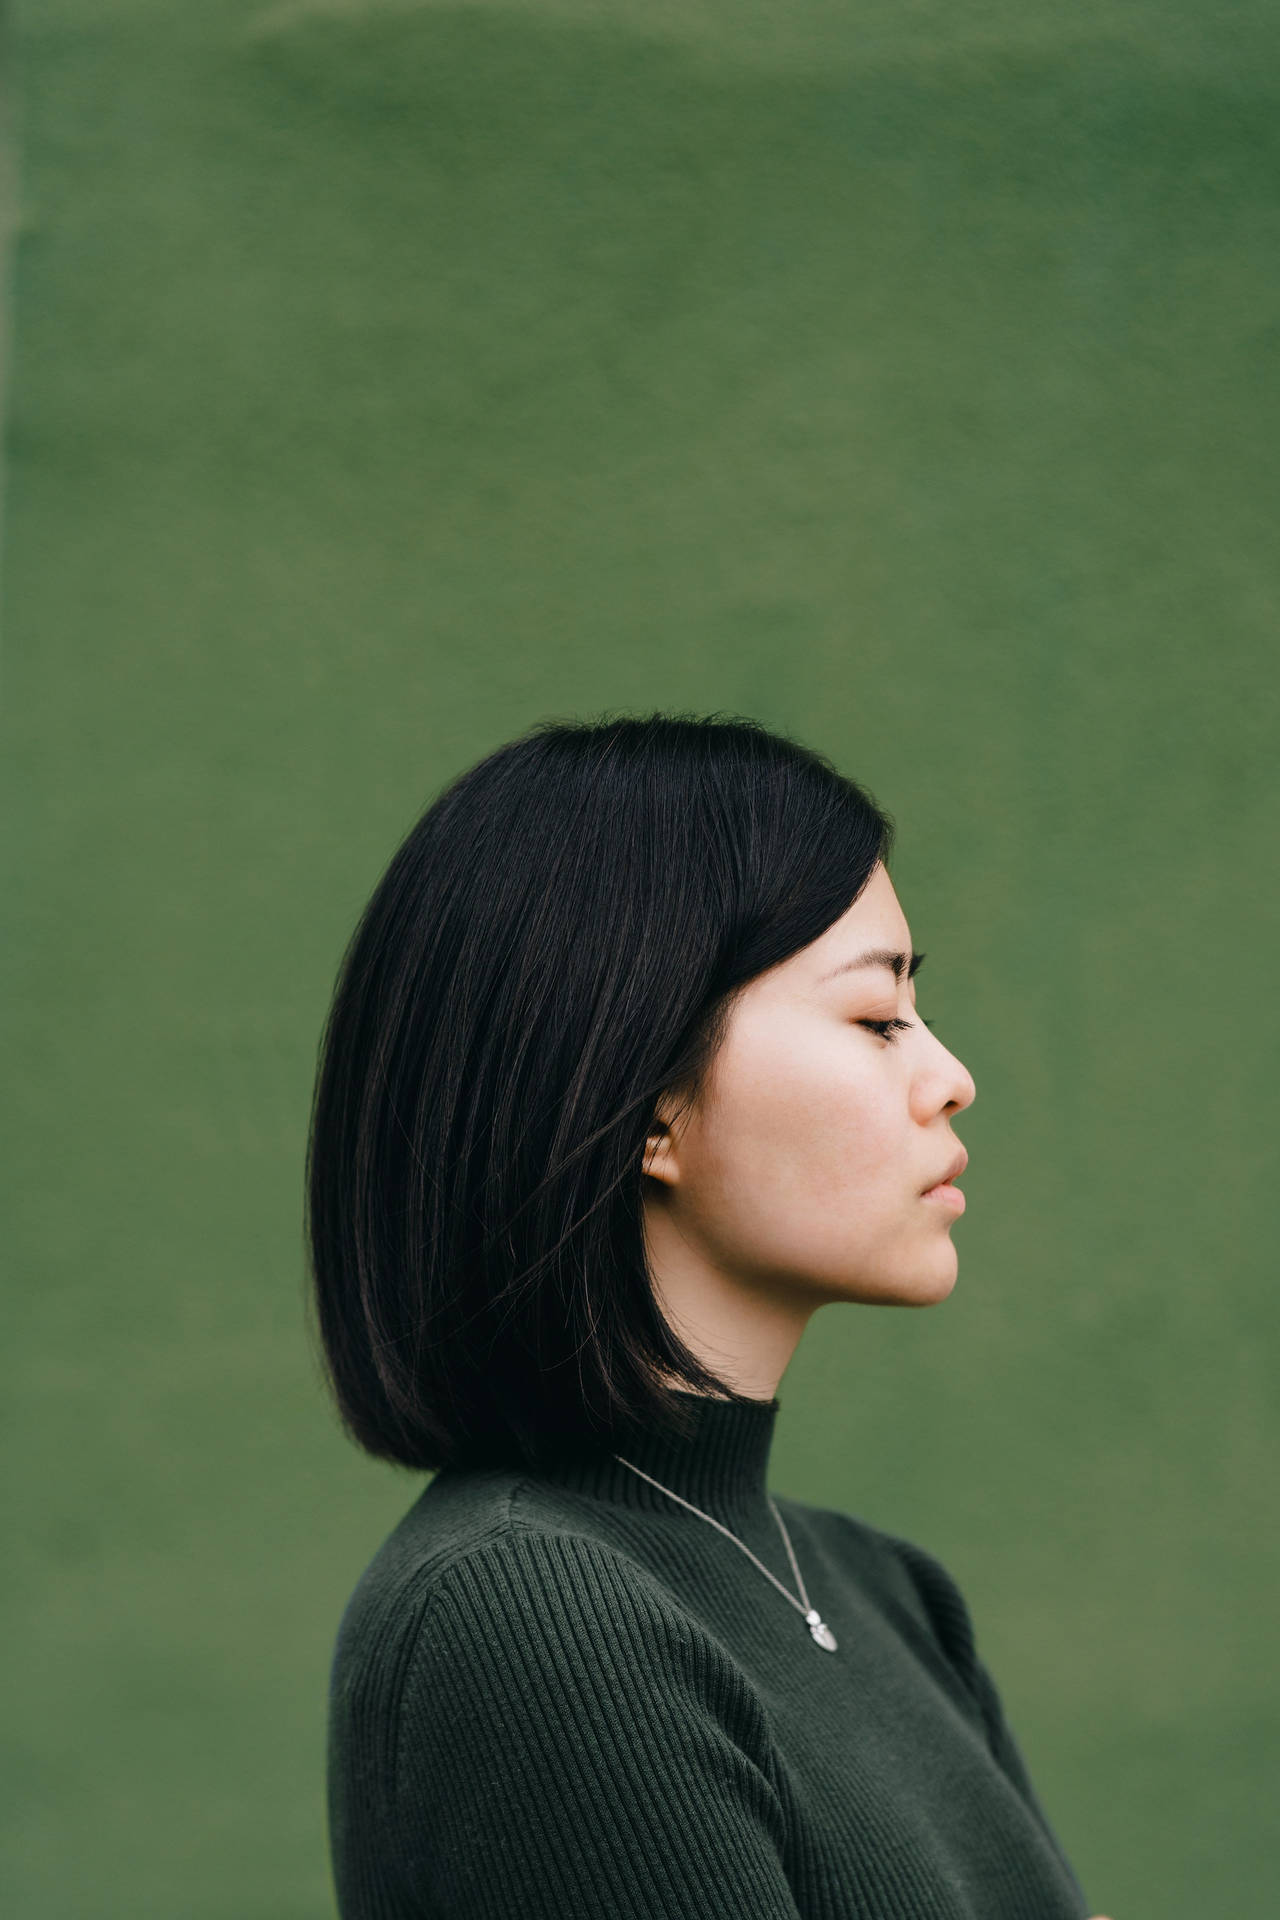 Asian Woman In Dark Green Turtleneck